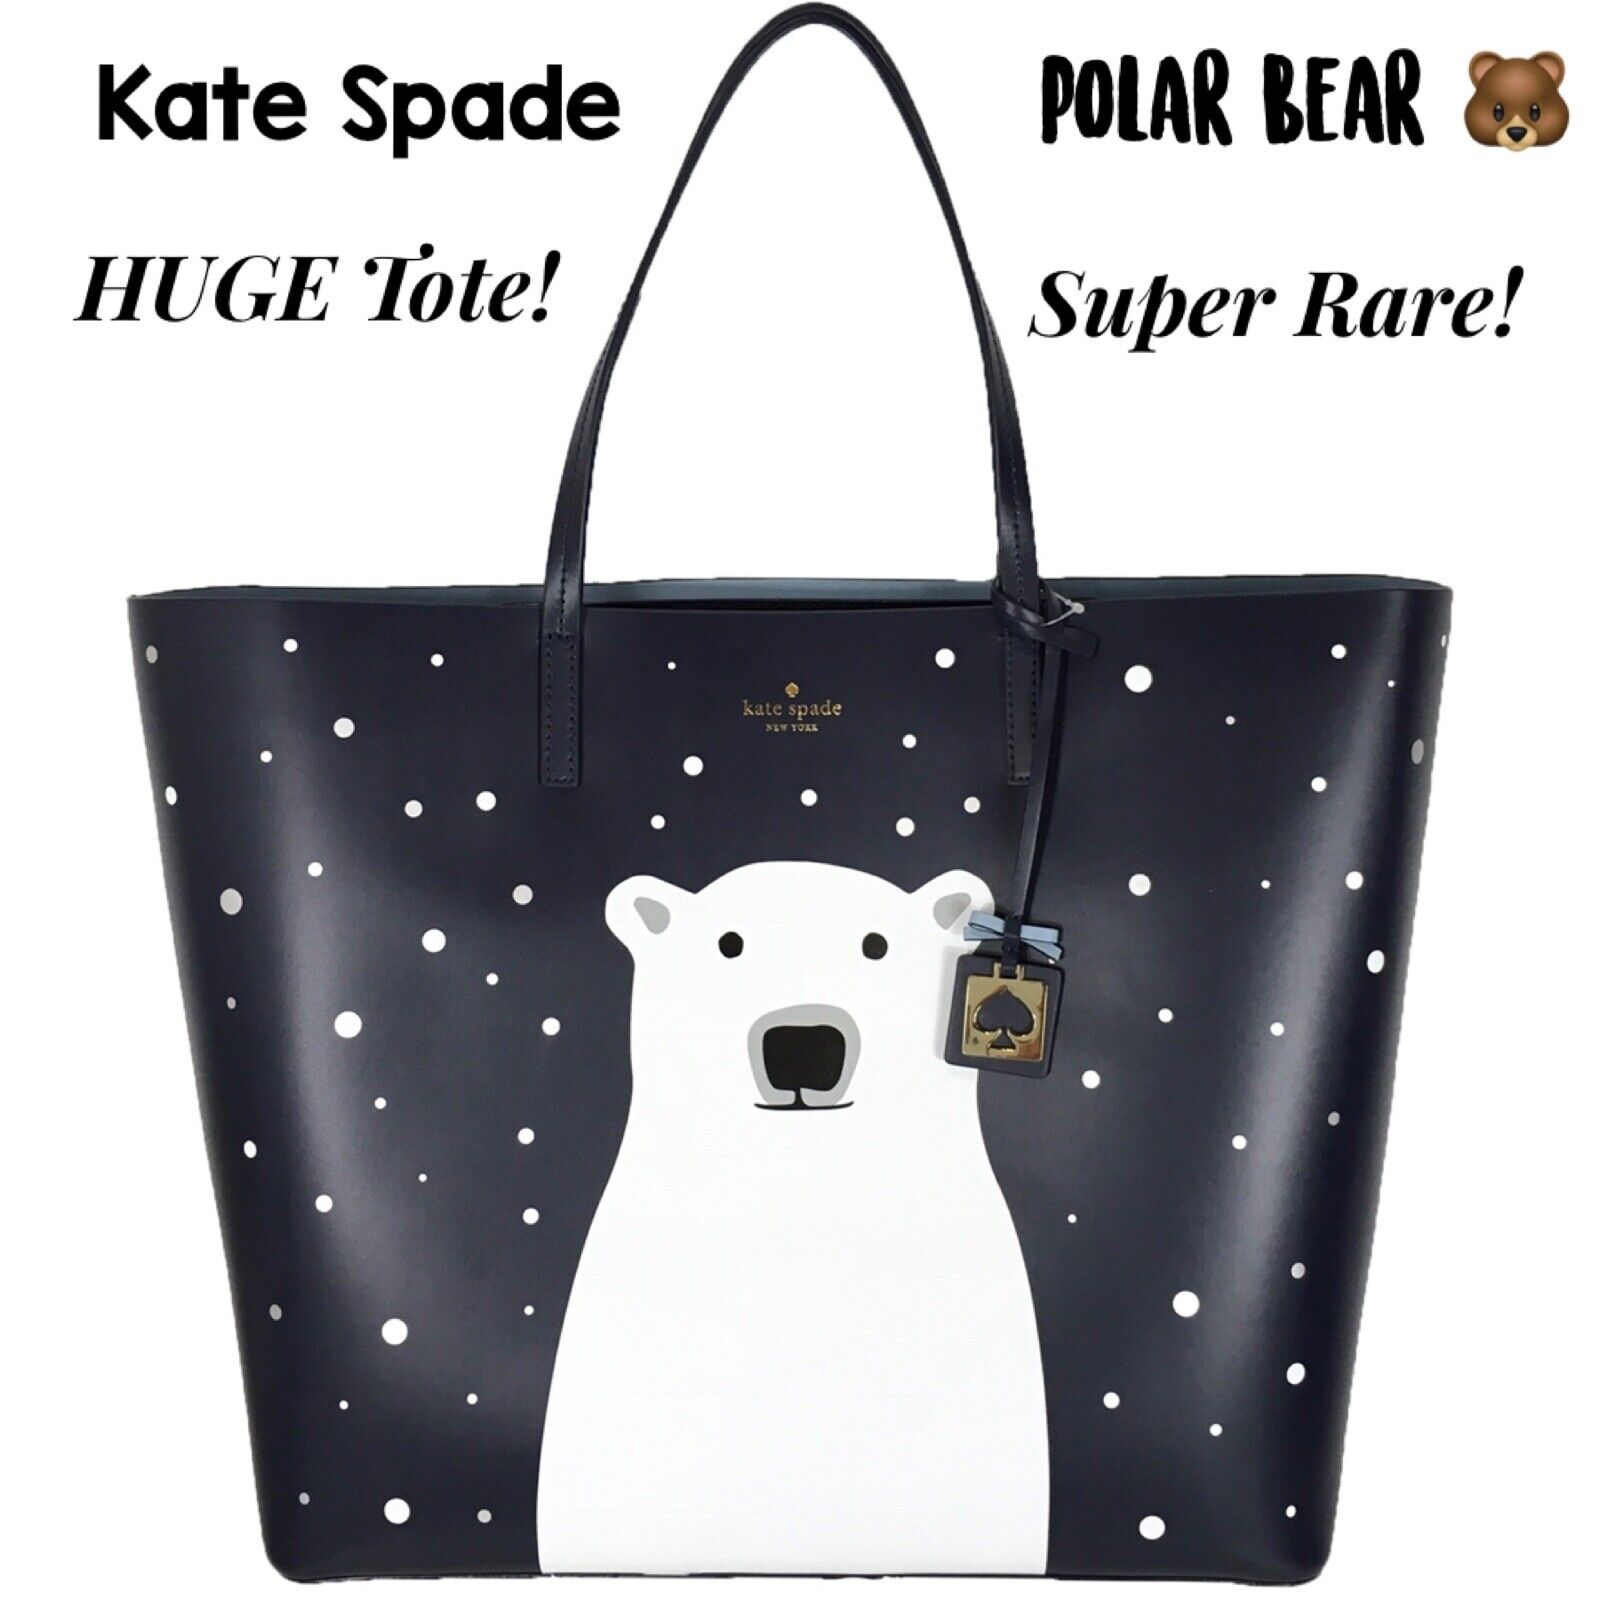 Kate Spade Cold Comforts Polar Bear XL Tote Rare | eBay